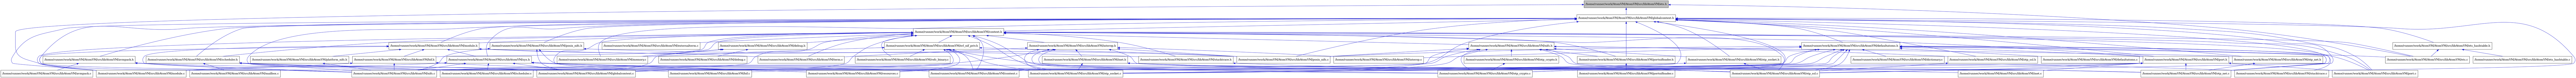 digraph {
    graph [bgcolor="#00000000"]
    node [shape=rectangle style=filled fillcolor="#FFFFFF" font=Helvetica padding=2]
    edge [color="#1414CE"]
    "11" [label="/home/runner/work/AtomVM/AtomVM/src/libAtomVM/bif.c" tooltip="/home/runner/work/AtomVM/AtomVM/src/libAtomVM/bif.c"]
    "49" [label="/home/runner/work/AtomVM/AtomVM/src/libAtomVM/dictionary.c" tooltip="/home/runner/work/AtomVM/AtomVM/src/libAtomVM/dictionary.c"]
    "10" [label="/home/runner/work/AtomVM/AtomVM/src/libAtomVM/bif.h" tooltip="/home/runner/work/AtomVM/AtomVM/src/libAtomVM/bif.h"]
    "32" [label="/home/runner/work/AtomVM/AtomVM/src/libAtomVM/platform_nifs.h" tooltip="/home/runner/work/AtomVM/AtomVM/src/libAtomVM/platform_nifs.h"]
    "20" [label="/home/runner/work/AtomVM/AtomVM/src/libAtomVM/posix_nifs.c" tooltip="/home/runner/work/AtomVM/AtomVM/src/libAtomVM/posix_nifs.c"]
    "52" [label="/home/runner/work/AtomVM/AtomVM/src/libAtomVM/posix_nifs.h" tooltip="/home/runner/work/AtomVM/AtomVM/src/libAtomVM/posix_nifs.h"]
    "48" [label="/home/runner/work/AtomVM/AtomVM/src/libAtomVM/defaultatoms.c" tooltip="/home/runner/work/AtomVM/AtomVM/src/libAtomVM/defaultatoms.c"]
    "47" [label="/home/runner/work/AtomVM/AtomVM/src/libAtomVM/defaultatoms.h" tooltip="/home/runner/work/AtomVM/AtomVM/src/libAtomVM/defaultatoms.h"]
    "26" [label="/home/runner/work/AtomVM/AtomVM/src/libAtomVM/inet.c" tooltip="/home/runner/work/AtomVM/AtomVM/src/libAtomVM/inet.c"]
    "25" [label="/home/runner/work/AtomVM/AtomVM/src/libAtomVM/inet.h" tooltip="/home/runner/work/AtomVM/AtomVM/src/libAtomVM/inet.h"]
    "16" [label="/home/runner/work/AtomVM/AtomVM/src/libAtomVM/scheduler.c" tooltip="/home/runner/work/AtomVM/AtomVM/src/libAtomVM/scheduler.c"]
    "45" [label="/home/runner/work/AtomVM/AtomVM/src/libAtomVM/scheduler.h" tooltip="/home/runner/work/AtomVM/AtomVM/src/libAtomVM/scheduler.h"]
    "8" [label="/home/runner/work/AtomVM/AtomVM/src/libAtomVM/context.c" tooltip="/home/runner/work/AtomVM/AtomVM/src/libAtomVM/context.c"]
    "9" [label="/home/runner/work/AtomVM/AtomVM/src/libAtomVM/context.h" tooltip="/home/runner/work/AtomVM/AtomVM/src/libAtomVM/context.h"]
    "43" [label="/home/runner/work/AtomVM/AtomVM/src/libAtomVM/port.c" tooltip="/home/runner/work/AtomVM/AtomVM/src/libAtomVM/port.c"]
    "44" [label="/home/runner/work/AtomVM/AtomVM/src/libAtomVM/port.h" tooltip="/home/runner/work/AtomVM/AtomVM/src/libAtomVM/port.h"]
    "2" [label="/home/runner/work/AtomVM/AtomVM/src/libAtomVM/ets.c" tooltip="/home/runner/work/AtomVM/AtomVM/src/libAtomVM/ets.c"]
    "1" [label="/home/runner/work/AtomVM/AtomVM/src/libAtomVM/ets.h" tooltip="/home/runner/work/AtomVM/AtomVM/src/libAtomVM/ets.h" fillcolor="#BFBFBF"]
    "34" [label="/home/runner/work/AtomVM/AtomVM/src/libAtomVM/stacktrace.c" tooltip="/home/runner/work/AtomVM/AtomVM/src/libAtomVM/stacktrace.c"]
    "33" [label="/home/runner/work/AtomVM/AtomVM/src/libAtomVM/stacktrace.h" tooltip="/home/runner/work/AtomVM/AtomVM/src/libAtomVM/stacktrace.h"]
    "21" [label="/home/runner/work/AtomVM/AtomVM/src/libAtomVM/refc_binary.c" tooltip="/home/runner/work/AtomVM/AtomVM/src/libAtomVM/refc_binary.c"]
    "46" [label="/home/runner/work/AtomVM/AtomVM/src/libAtomVM/mailbox.c" tooltip="/home/runner/work/AtomVM/AtomVM/src/libAtomVM/mailbox.c"]
    "12" [label="/home/runner/work/AtomVM/AtomVM/src/libAtomVM/module.c" tooltip="/home/runner/work/AtomVM/AtomVM/src/libAtomVM/module.c"]
    "31" [label="/home/runner/work/AtomVM/AtomVM/src/libAtomVM/module.h" tooltip="/home/runner/work/AtomVM/AtomVM/src/libAtomVM/module.h"]
    "5" [label="/home/runner/work/AtomVM/AtomVM/src/libAtomVM/avmpack.c" tooltip="/home/runner/work/AtomVM/AtomVM/src/libAtomVM/avmpack.c"]
    "4" [label="/home/runner/work/AtomVM/AtomVM/src/libAtomVM/avmpack.h" tooltip="/home/runner/work/AtomVM/AtomVM/src/libAtomVM/avmpack.h"]
    "30" [label="/home/runner/work/AtomVM/AtomVM/src/libAtomVM/term.c" tooltip="/home/runner/work/AtomVM/AtomVM/src/libAtomVM/term.c"]
    "28" [label="/home/runner/work/AtomVM/AtomVM/src/libAtomVM/interop.c" tooltip="/home/runner/work/AtomVM/AtomVM/src/libAtomVM/interop.c"]
    "19" [label="/home/runner/work/AtomVM/AtomVM/src/libAtomVM/otp_ssl.c" tooltip="/home/runner/work/AtomVM/AtomVM/src/libAtomVM/otp_ssl.c"]
    "24" [label="/home/runner/work/AtomVM/AtomVM/src/libAtomVM/interop.h" tooltip="/home/runner/work/AtomVM/AtomVM/src/libAtomVM/interop.h"]
    "40" [label="/home/runner/work/AtomVM/AtomVM/src/libAtomVM/otp_ssl.h" tooltip="/home/runner/work/AtomVM/AtomVM/src/libAtomVM/otp_ssl.h"]
    "42" [label="/home/runner/work/AtomVM/AtomVM/src/libAtomVM/portnifloader.c" tooltip="/home/runner/work/AtomVM/AtomVM/src/libAtomVM/portnifloader.c"]
    "41" [label="/home/runner/work/AtomVM/AtomVM/src/libAtomVM/portnifloader.h" tooltip="/home/runner/work/AtomVM/AtomVM/src/libAtomVM/portnifloader.h"]
    "22" [label="/home/runner/work/AtomVM/AtomVM/src/libAtomVM/resources.c" tooltip="/home/runner/work/AtomVM/AtomVM/src/libAtomVM/resources.c"]
    "29" [label="/home/runner/work/AtomVM/AtomVM/src/libAtomVM/otp_crypto.c" tooltip="/home/runner/work/AtomVM/AtomVM/src/libAtomVM/otp_crypto.c"]
    "37" [label="/home/runner/work/AtomVM/AtomVM/src/libAtomVM/otp_crypto.h" tooltip="/home/runner/work/AtomVM/AtomVM/src/libAtomVM/otp_crypto.h"]
    "27" [label="/home/runner/work/AtomVM/AtomVM/src/libAtomVM/otp_net.c" tooltip="/home/runner/work/AtomVM/AtomVM/src/libAtomVM/otp_net.c"]
    "51" [label="/home/runner/work/AtomVM/AtomVM/src/libAtomVM/ets_hashtable.c" tooltip="/home/runner/work/AtomVM/AtomVM/src/libAtomVM/ets_hashtable.c"]
    "38" [label="/home/runner/work/AtomVM/AtomVM/src/libAtomVM/otp_net.h" tooltip="/home/runner/work/AtomVM/AtomVM/src/libAtomVM/otp_net.h"]
    "50" [label="/home/runner/work/AtomVM/AtomVM/src/libAtomVM/ets_hashtable.h" tooltip="/home/runner/work/AtomVM/AtomVM/src/libAtomVM/ets_hashtable.h"]
    "17" [label="/home/runner/work/AtomVM/AtomVM/src/libAtomVM/erl_nif_priv.h" tooltip="/home/runner/work/AtomVM/AtomVM/src/libAtomVM/erl_nif_priv.h"]
    "35" [label="/home/runner/work/AtomVM/AtomVM/src/libAtomVM/sys.h" tooltip="/home/runner/work/AtomVM/AtomVM/src/libAtomVM/sys.h"]
    "7" [label="/home/runner/work/AtomVM/AtomVM/src/libAtomVM/nifs.c" tooltip="/home/runner/work/AtomVM/AtomVM/src/libAtomVM/nifs.c"]
    "36" [label="/home/runner/work/AtomVM/AtomVM/src/libAtomVM/nifs.h" tooltip="/home/runner/work/AtomVM/AtomVM/src/libAtomVM/nifs.h"]
    "14" [label="/home/runner/work/AtomVM/AtomVM/src/libAtomVM/debug.c" tooltip="/home/runner/work/AtomVM/AtomVM/src/libAtomVM/debug.c"]
    "13" [label="/home/runner/work/AtomVM/AtomVM/src/libAtomVM/debug.h" tooltip="/home/runner/work/AtomVM/AtomVM/src/libAtomVM/debug.h"]
    "6" [label="/home/runner/work/AtomVM/AtomVM/src/libAtomVM/globalcontext.c" tooltip="/home/runner/work/AtomVM/AtomVM/src/libAtomVM/globalcontext.c"]
    "3" [label="/home/runner/work/AtomVM/AtomVM/src/libAtomVM/globalcontext.h" tooltip="/home/runner/work/AtomVM/AtomVM/src/libAtomVM/globalcontext.h"]
    "15" [label="/home/runner/work/AtomVM/AtomVM/src/libAtomVM/memory.c" tooltip="/home/runner/work/AtomVM/AtomVM/src/libAtomVM/memory.c"]
    "18" [label="/home/runner/work/AtomVM/AtomVM/src/libAtomVM/otp_socket.c" tooltip="/home/runner/work/AtomVM/AtomVM/src/libAtomVM/otp_socket.c"]
    "39" [label="/home/runner/work/AtomVM/AtomVM/src/libAtomVM/otp_socket.h" tooltip="/home/runner/work/AtomVM/AtomVM/src/libAtomVM/otp_socket.h"]
    "23" [label="/home/runner/work/AtomVM/AtomVM/src/libAtomVM/externalterm.c" tooltip="/home/runner/work/AtomVM/AtomVM/src/libAtomVM/externalterm.c"]
    "10" -> "11" [dir=back tooltip="include"]
    "10" -> "12" [dir=back tooltip="include"]
    "10" -> "7" [dir=back tooltip="include"]
    "32" -> "7" [dir=back tooltip="include"]
    "52" -> "6" [dir=back tooltip="include"]
    "52" -> "7" [dir=back tooltip="include"]
    "52" -> "18" [dir=back tooltip="include"]
    "52" -> "20" [dir=back tooltip="include"]
    "47" -> "11" [dir=back tooltip="include"]
    "47" -> "48" [dir=back tooltip="include"]
    "47" -> "49" [dir=back tooltip="include"]
    "47" -> "2" [dir=back tooltip="include"]
    "47" -> "6" [dir=back tooltip="include"]
    "47" -> "28" [dir=back tooltip="include"]
    "47" -> "7" [dir=back tooltip="include"]
    "47" -> "29" [dir=back tooltip="include"]
    "47" -> "27" [dir=back tooltip="include"]
    "47" -> "18" [dir=back tooltip="include"]
    "47" -> "19" [dir=back tooltip="include"]
    "47" -> "43" [dir=back tooltip="include"]
    "47" -> "44" [dir=back tooltip="include"]
    "47" -> "20" [dir=back tooltip="include"]
    "47" -> "22" [dir=back tooltip="include"]
    "47" -> "34" [dir=back tooltip="include"]
    "25" -> "26" [dir=back tooltip="include"]
    "25" -> "27" [dir=back tooltip="include"]
    "25" -> "18" [dir=back tooltip="include"]
    "25" -> "19" [dir=back tooltip="include"]
    "45" -> "6" [dir=back tooltip="include"]
    "45" -> "46" [dir=back tooltip="include"]
    "45" -> "7" [dir=back tooltip="include"]
    "45" -> "18" [dir=back tooltip="include"]
    "45" -> "16" [dir=back tooltip="include"]
    "9" -> "10" [dir=back tooltip="include"]
    "9" -> "8" [dir=back tooltip="include"]
    "9" -> "13" [dir=back tooltip="include"]
    "9" -> "17" [dir=back tooltip="include"]
    "9" -> "2" [dir=back tooltip="include"]
    "9" -> "23" [dir=back tooltip="include"]
    "9" -> "6" [dir=back tooltip="include"]
    "9" -> "24" [dir=back tooltip="include"]
    "9" -> "15" [dir=back tooltip="include"]
    "9" -> "12" [dir=back tooltip="include"]
    "9" -> "31" [dir=back tooltip="include"]
    "9" -> "7" [dir=back tooltip="include"]
    "9" -> "36" [dir=back tooltip="include"]
    "9" -> "29" [dir=back tooltip="include"]
    "9" -> "27" [dir=back tooltip="include"]
    "9" -> "18" [dir=back tooltip="include"]
    "9" -> "19" [dir=back tooltip="include"]
    "9" -> "43" [dir=back tooltip="include"]
    "9" -> "44" [dir=back tooltip="include"]
    "9" -> "41" [dir=back tooltip="include"]
    "9" -> "21" [dir=back tooltip="include"]
    "9" -> "22" [dir=back tooltip="include"]
    "9" -> "45" [dir=back tooltip="include"]
    "9" -> "33" [dir=back tooltip="include"]
    "9" -> "30" [dir=back tooltip="include"]
    "44" -> "26" [dir=back tooltip="include"]
    "44" -> "7" [dir=back tooltip="include"]
    "44" -> "27" [dir=back tooltip="include"]
    "44" -> "18" [dir=back tooltip="include"]
    "44" -> "19" [dir=back tooltip="include"]
    "44" -> "43" [dir=back tooltip="include"]
    "1" -> "2" [dir=back tooltip="include"]
    "1" -> "3" [dir=back tooltip="include"]
    "1" -> "7" [dir=back tooltip="include"]
    "33" -> "34" [dir=back tooltip="include"]
    "31" -> "10" [dir=back tooltip="include"]
    "31" -> "12" [dir=back tooltip="include"]
    "31" -> "7" [dir=back tooltip="include"]
    "31" -> "32" [dir=back tooltip="include"]
    "31" -> "33" [dir=back tooltip="include"]
    "31" -> "35" [dir=back tooltip="include"]
    "31" -> "30" [dir=back tooltip="include"]
    "4" -> "5" [dir=back tooltip="include"]
    "4" -> "6" [dir=back tooltip="include"]
    "4" -> "7" [dir=back tooltip="include"]
    "24" -> "25" [dir=back tooltip="include"]
    "24" -> "28" [dir=back tooltip="include"]
    "24" -> "7" [dir=back tooltip="include"]
    "24" -> "29" [dir=back tooltip="include"]
    "24" -> "27" [dir=back tooltip="include"]
    "24" -> "18" [dir=back tooltip="include"]
    "24" -> "19" [dir=back tooltip="include"]
    "24" -> "20" [dir=back tooltip="include"]
    "24" -> "30" [dir=back tooltip="include"]
    "40" -> "19" [dir=back tooltip="include"]
    "41" -> "42" [dir=back tooltip="include"]
    "37" -> "29" [dir=back tooltip="include"]
    "38" -> "27" [dir=back tooltip="include"]
    "50" -> "2" [dir=back tooltip="include"]
    "50" -> "51" [dir=back tooltip="include"]
    "17" -> "8" [dir=back tooltip="include"]
    "17" -> "6" [dir=back tooltip="include"]
    "17" -> "15" [dir=back tooltip="include"]
    "17" -> "18" [dir=back tooltip="include"]
    "17" -> "19" [dir=back tooltip="include"]
    "17" -> "20" [dir=back tooltip="include"]
    "17" -> "21" [dir=back tooltip="include"]
    "17" -> "22" [dir=back tooltip="include"]
    "35" -> "8" [dir=back tooltip="include"]
    "35" -> "6" [dir=back tooltip="include"]
    "35" -> "12" [dir=back tooltip="include"]
    "35" -> "7" [dir=back tooltip="include"]
    "35" -> "18" [dir=back tooltip="include"]
    "35" -> "22" [dir=back tooltip="include"]
    "35" -> "16" [dir=back tooltip="include"]
    "36" -> "12" [dir=back tooltip="include"]
    "36" -> "7" [dir=back tooltip="include"]
    "36" -> "29" [dir=back tooltip="include"]
    "36" -> "37" [dir=back tooltip="include"]
    "36" -> "27" [dir=back tooltip="include"]
    "36" -> "38" [dir=back tooltip="include"]
    "36" -> "18" [dir=back tooltip="include"]
    "36" -> "39" [dir=back tooltip="include"]
    "36" -> "19" [dir=back tooltip="include"]
    "36" -> "40" [dir=back tooltip="include"]
    "36" -> "41" [dir=back tooltip="include"]
    "36" -> "20" [dir=back tooltip="include"]
    "13" -> "14" [dir=back tooltip="include"]
    "13" -> "15" [dir=back tooltip="include"]
    "13" -> "16" [dir=back tooltip="include"]
    "3" -> "4" [dir=back tooltip="include"]
    "3" -> "8" [dir=back tooltip="include"]
    "3" -> "9" [dir=back tooltip="include"]
    "3" -> "47" [dir=back tooltip="include"]
    "3" -> "50" [dir=back tooltip="include"]
    "3" -> "6" [dir=back tooltip="include"]
    "3" -> "15" [dir=back tooltip="include"]
    "3" -> "12" [dir=back tooltip="include"]
    "3" -> "31" [dir=back tooltip="include"]
    "3" -> "7" [dir=back tooltip="include"]
    "3" -> "29" [dir=back tooltip="include"]
    "3" -> "27" [dir=back tooltip="include"]
    "3" -> "38" [dir=back tooltip="include"]
    "3" -> "18" [dir=back tooltip="include"]
    "3" -> "39" [dir=back tooltip="include"]
    "3" -> "19" [dir=back tooltip="include"]
    "3" -> "40" [dir=back tooltip="include"]
    "3" -> "43" [dir=back tooltip="include"]
    "3" -> "44" [dir=back tooltip="include"]
    "3" -> "41" [dir=back tooltip="include"]
    "3" -> "20" [dir=back tooltip="include"]
    "3" -> "52" [dir=back tooltip="include"]
    "3" -> "45" [dir=back tooltip="include"]
    "3" -> "34" [dir=back tooltip="include"]
    "3" -> "35" [dir=back tooltip="include"]
    "39" -> "18" [dir=back tooltip="include"]
    "39" -> "19" [dir=back tooltip="include"]
}